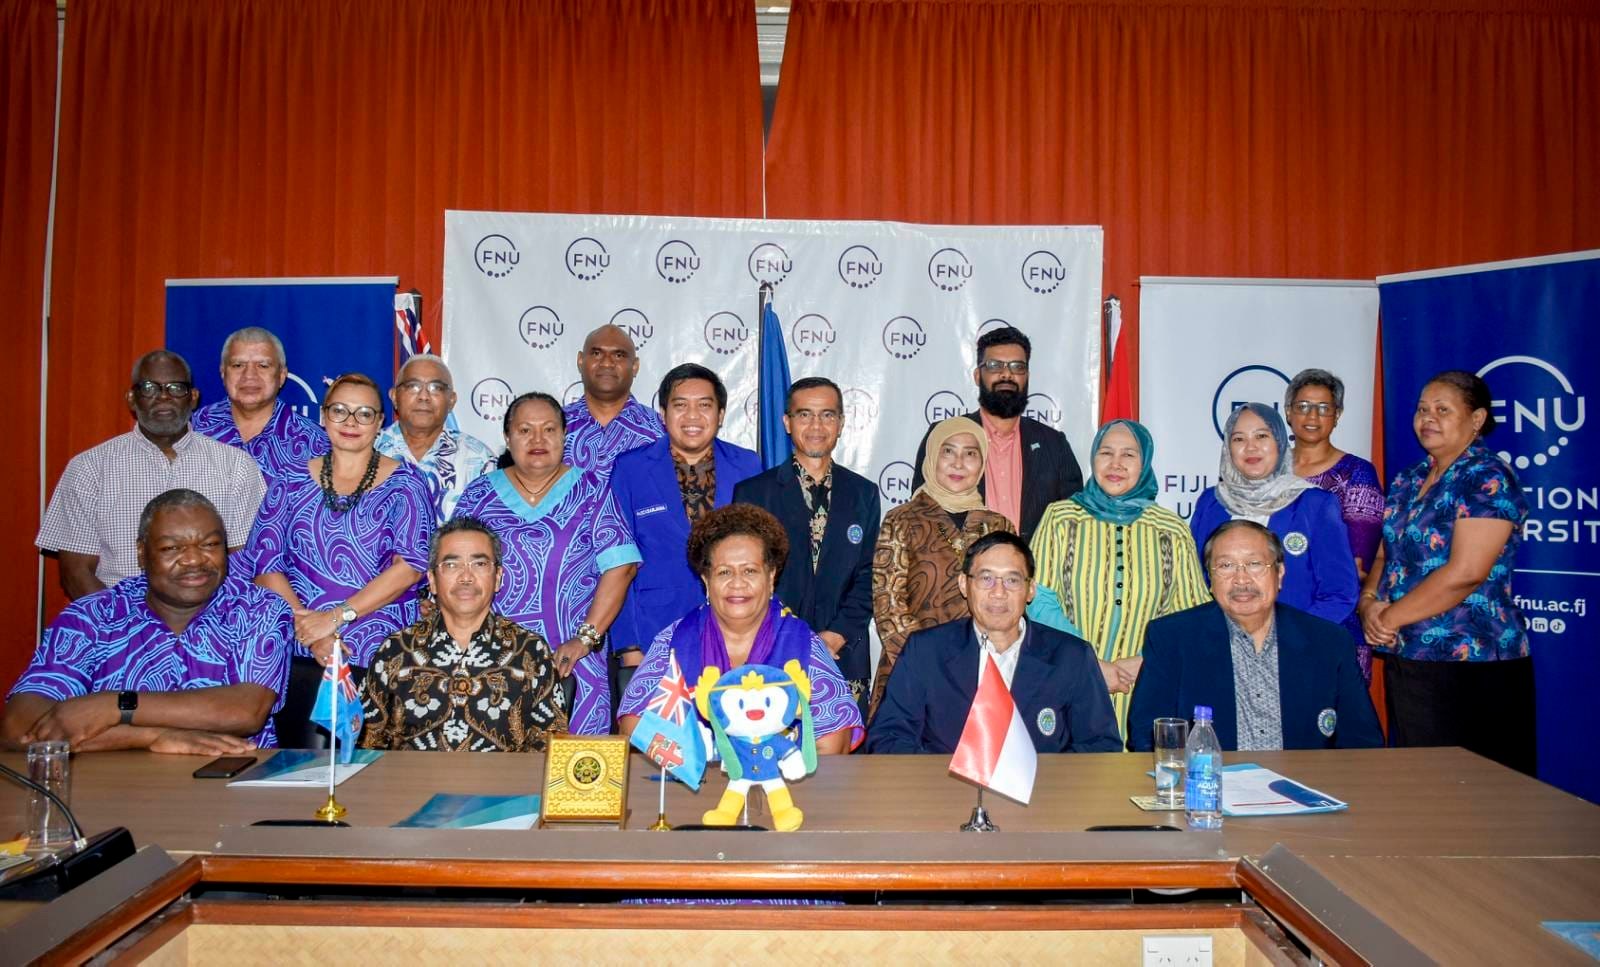 Representatives of the Senior Leadership Team from FNU and Universitas Negri Malang at the MoU Signing